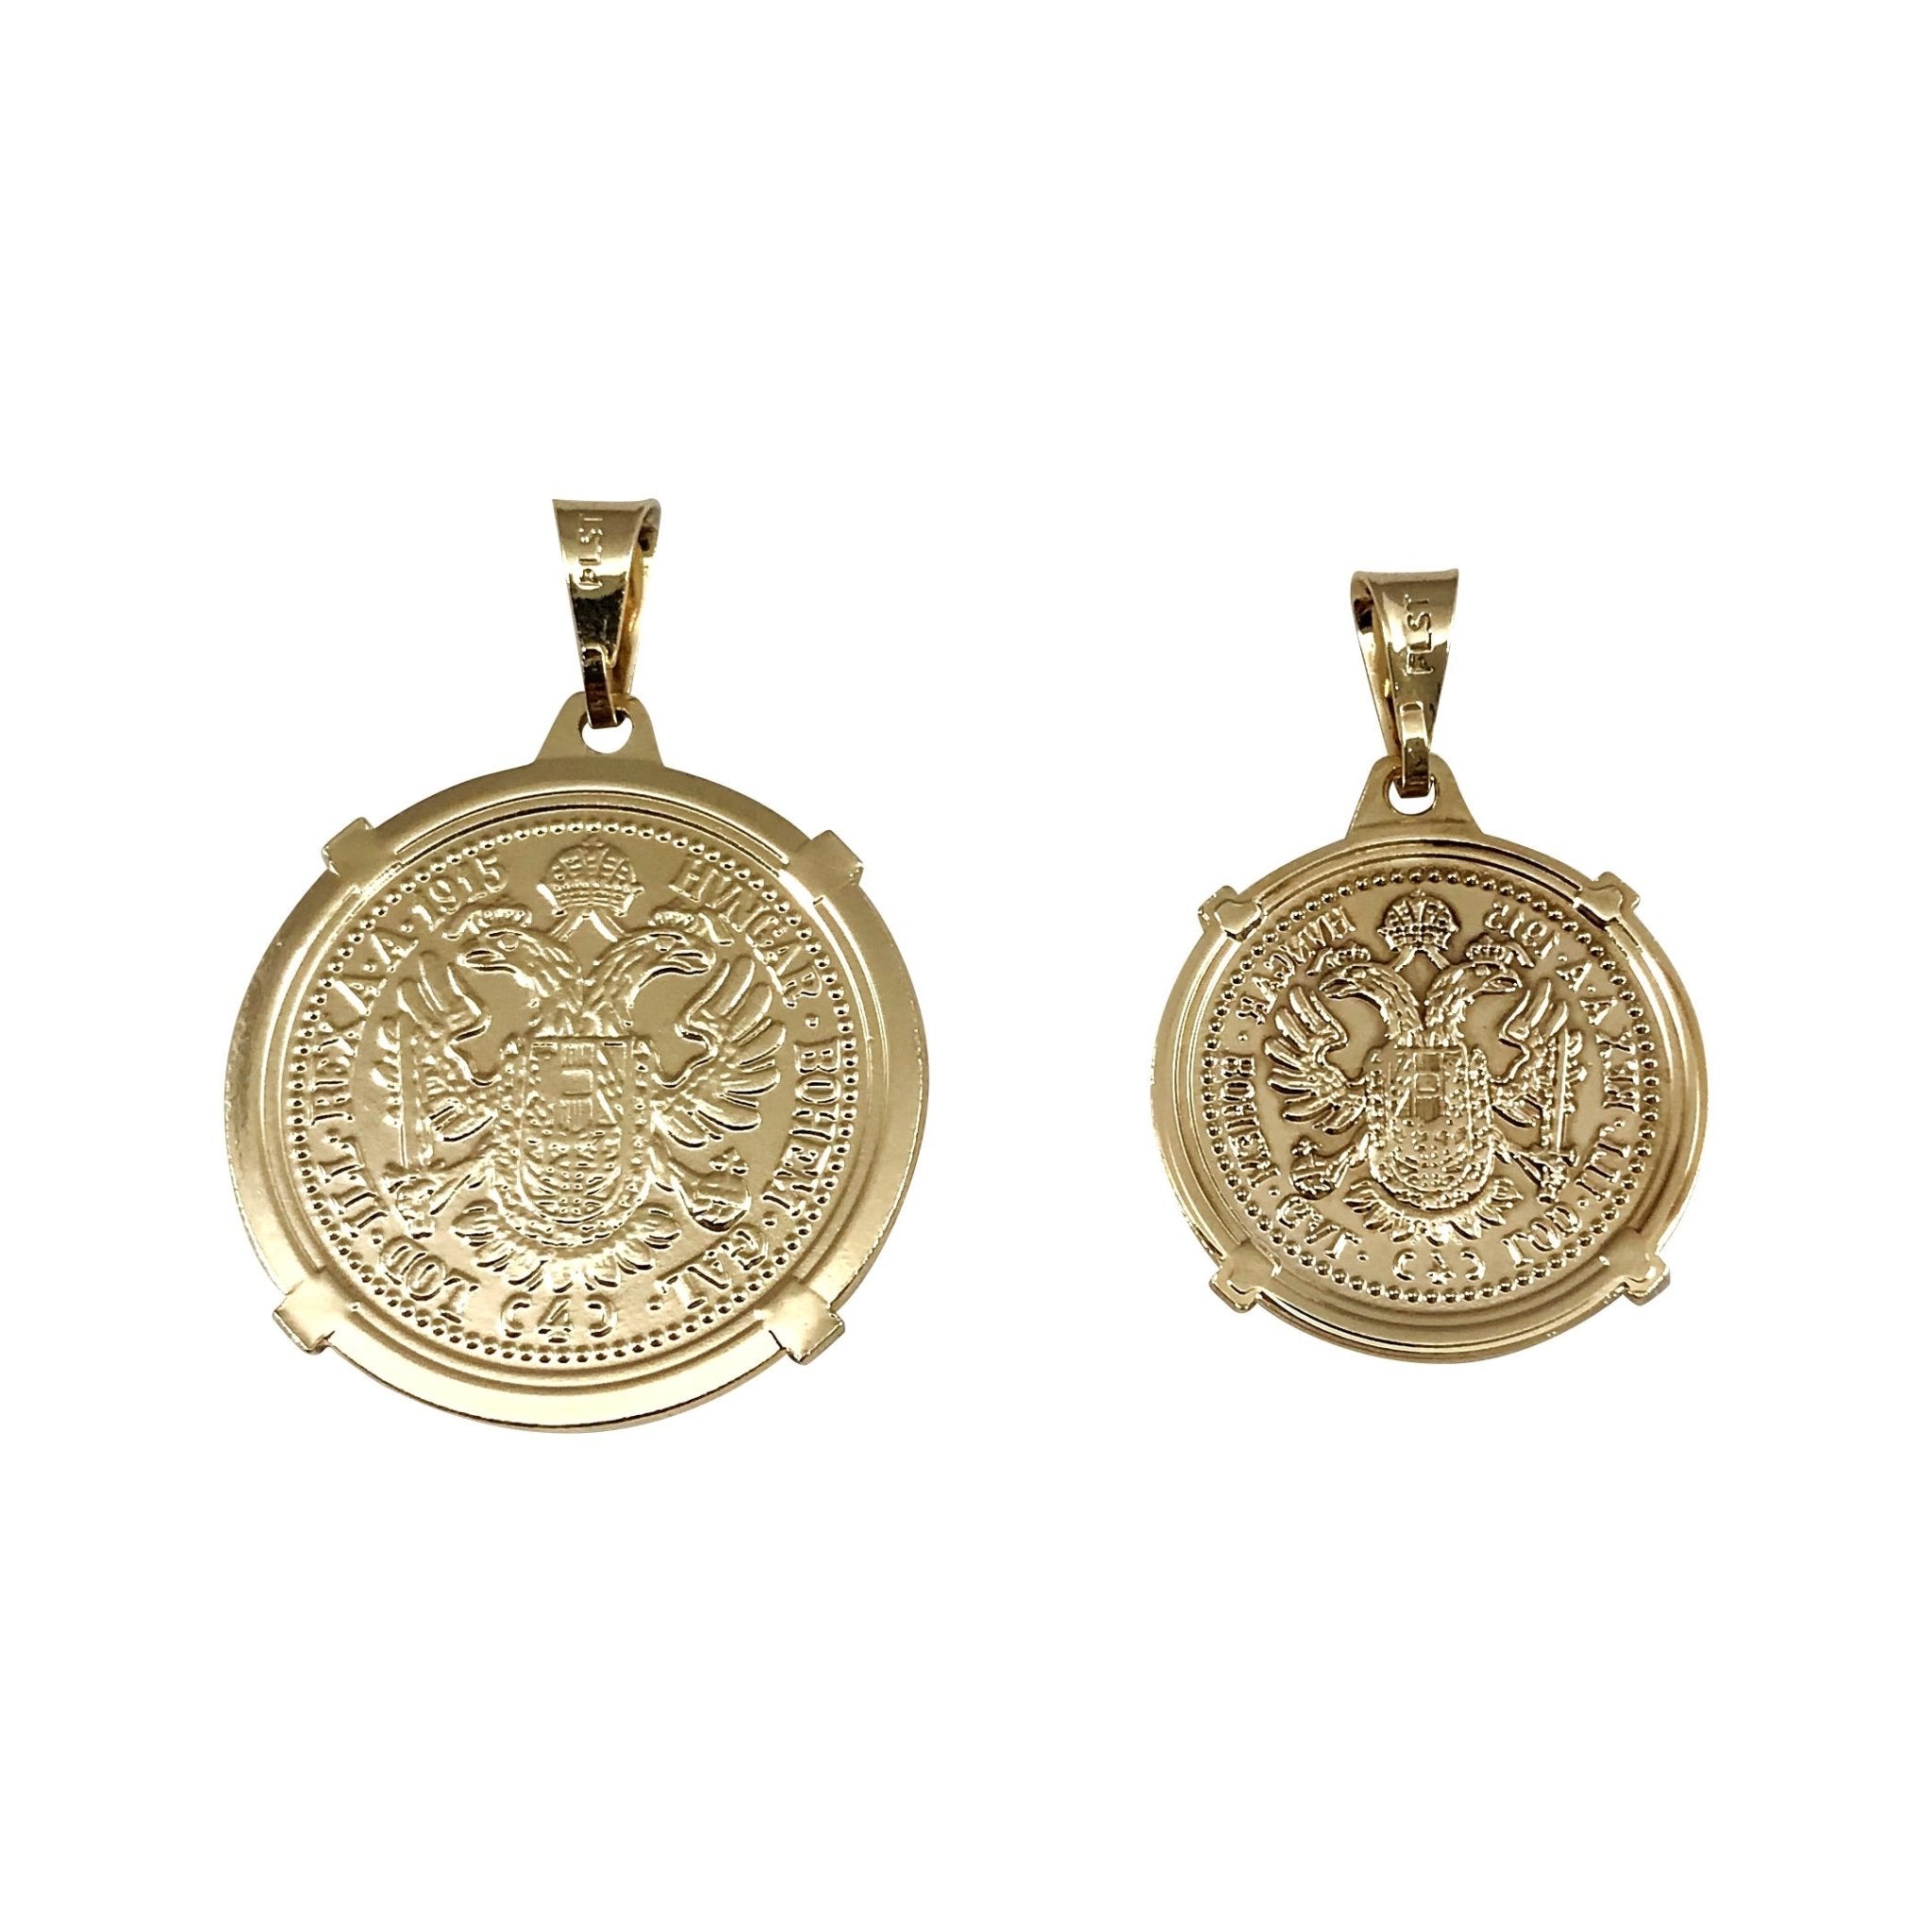 Reversible Medallion - NOA - Necklace